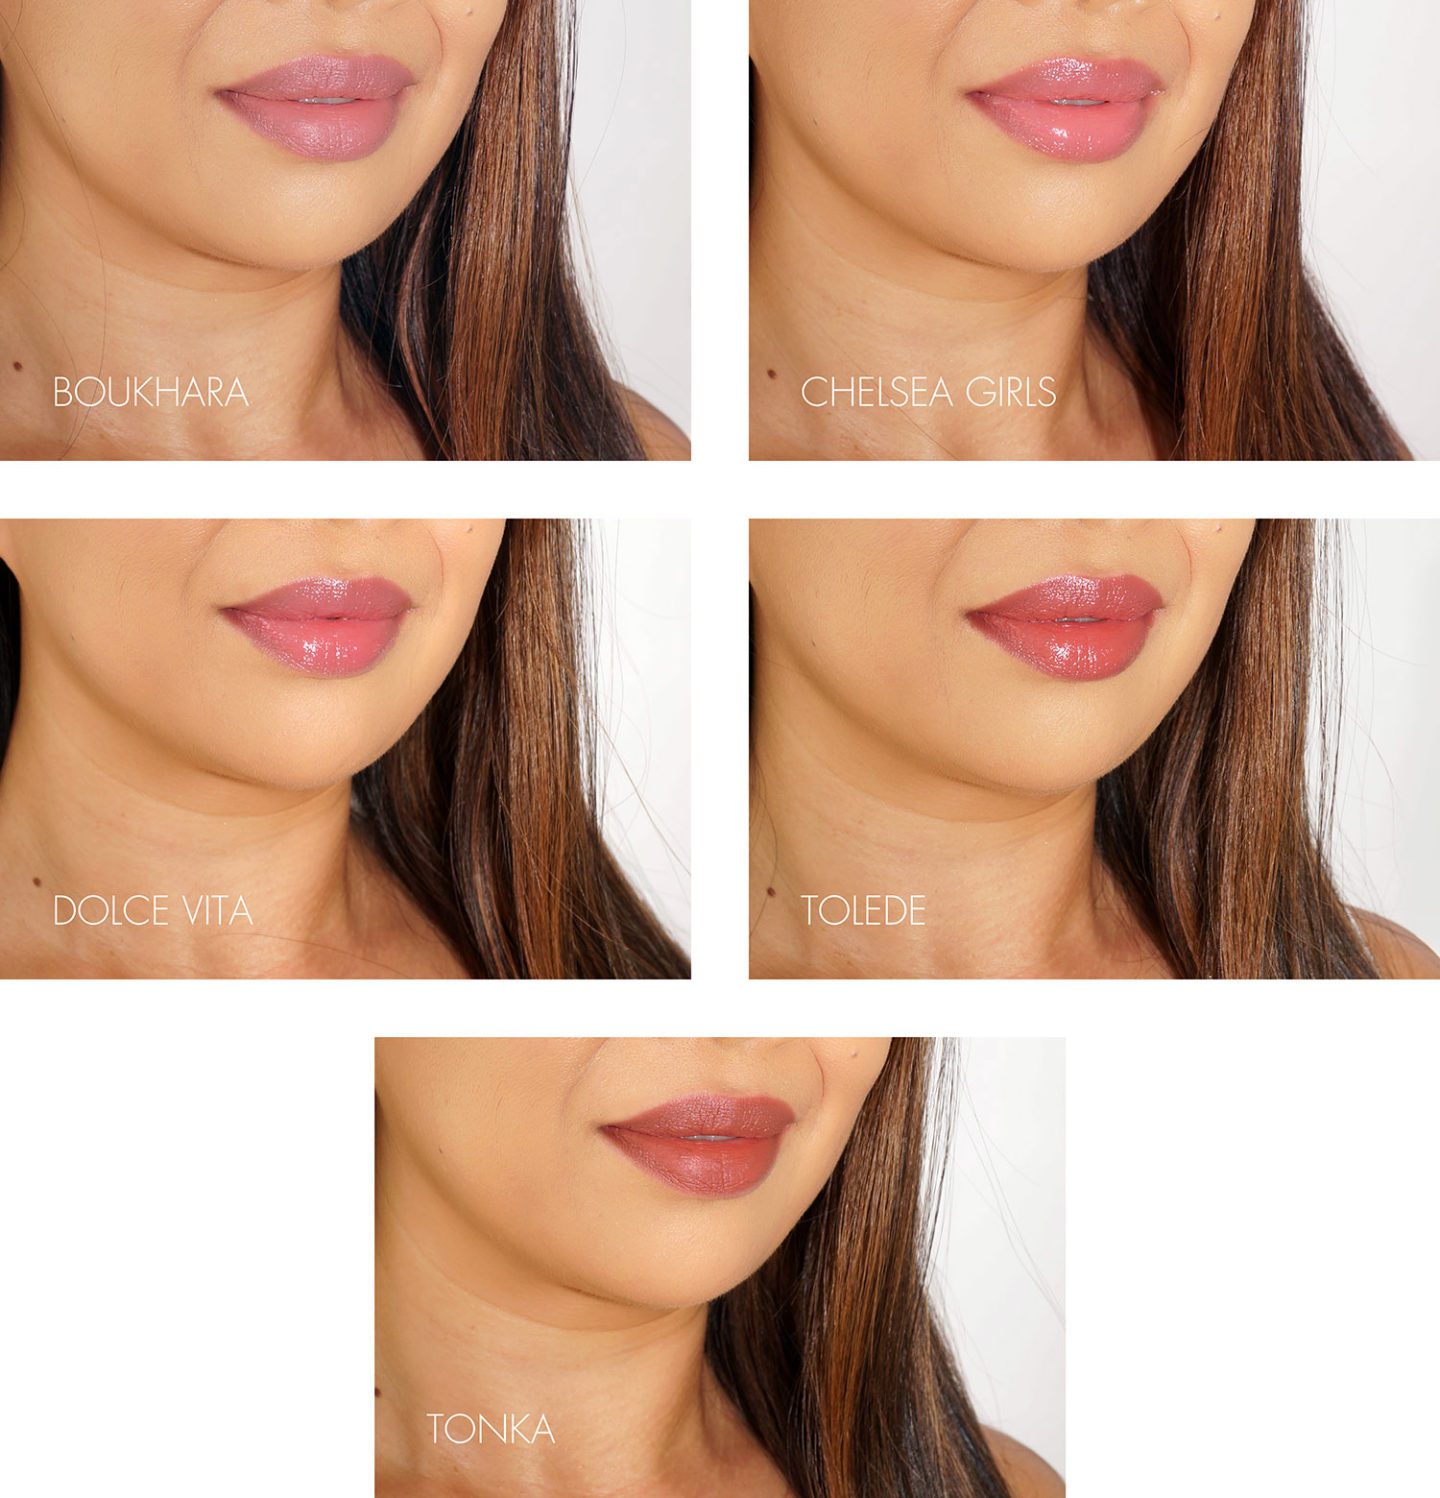 NARS Lipstick Swatches: Boukhara, Chelsea Girls, Dolce Vita, Tolede et Tonka